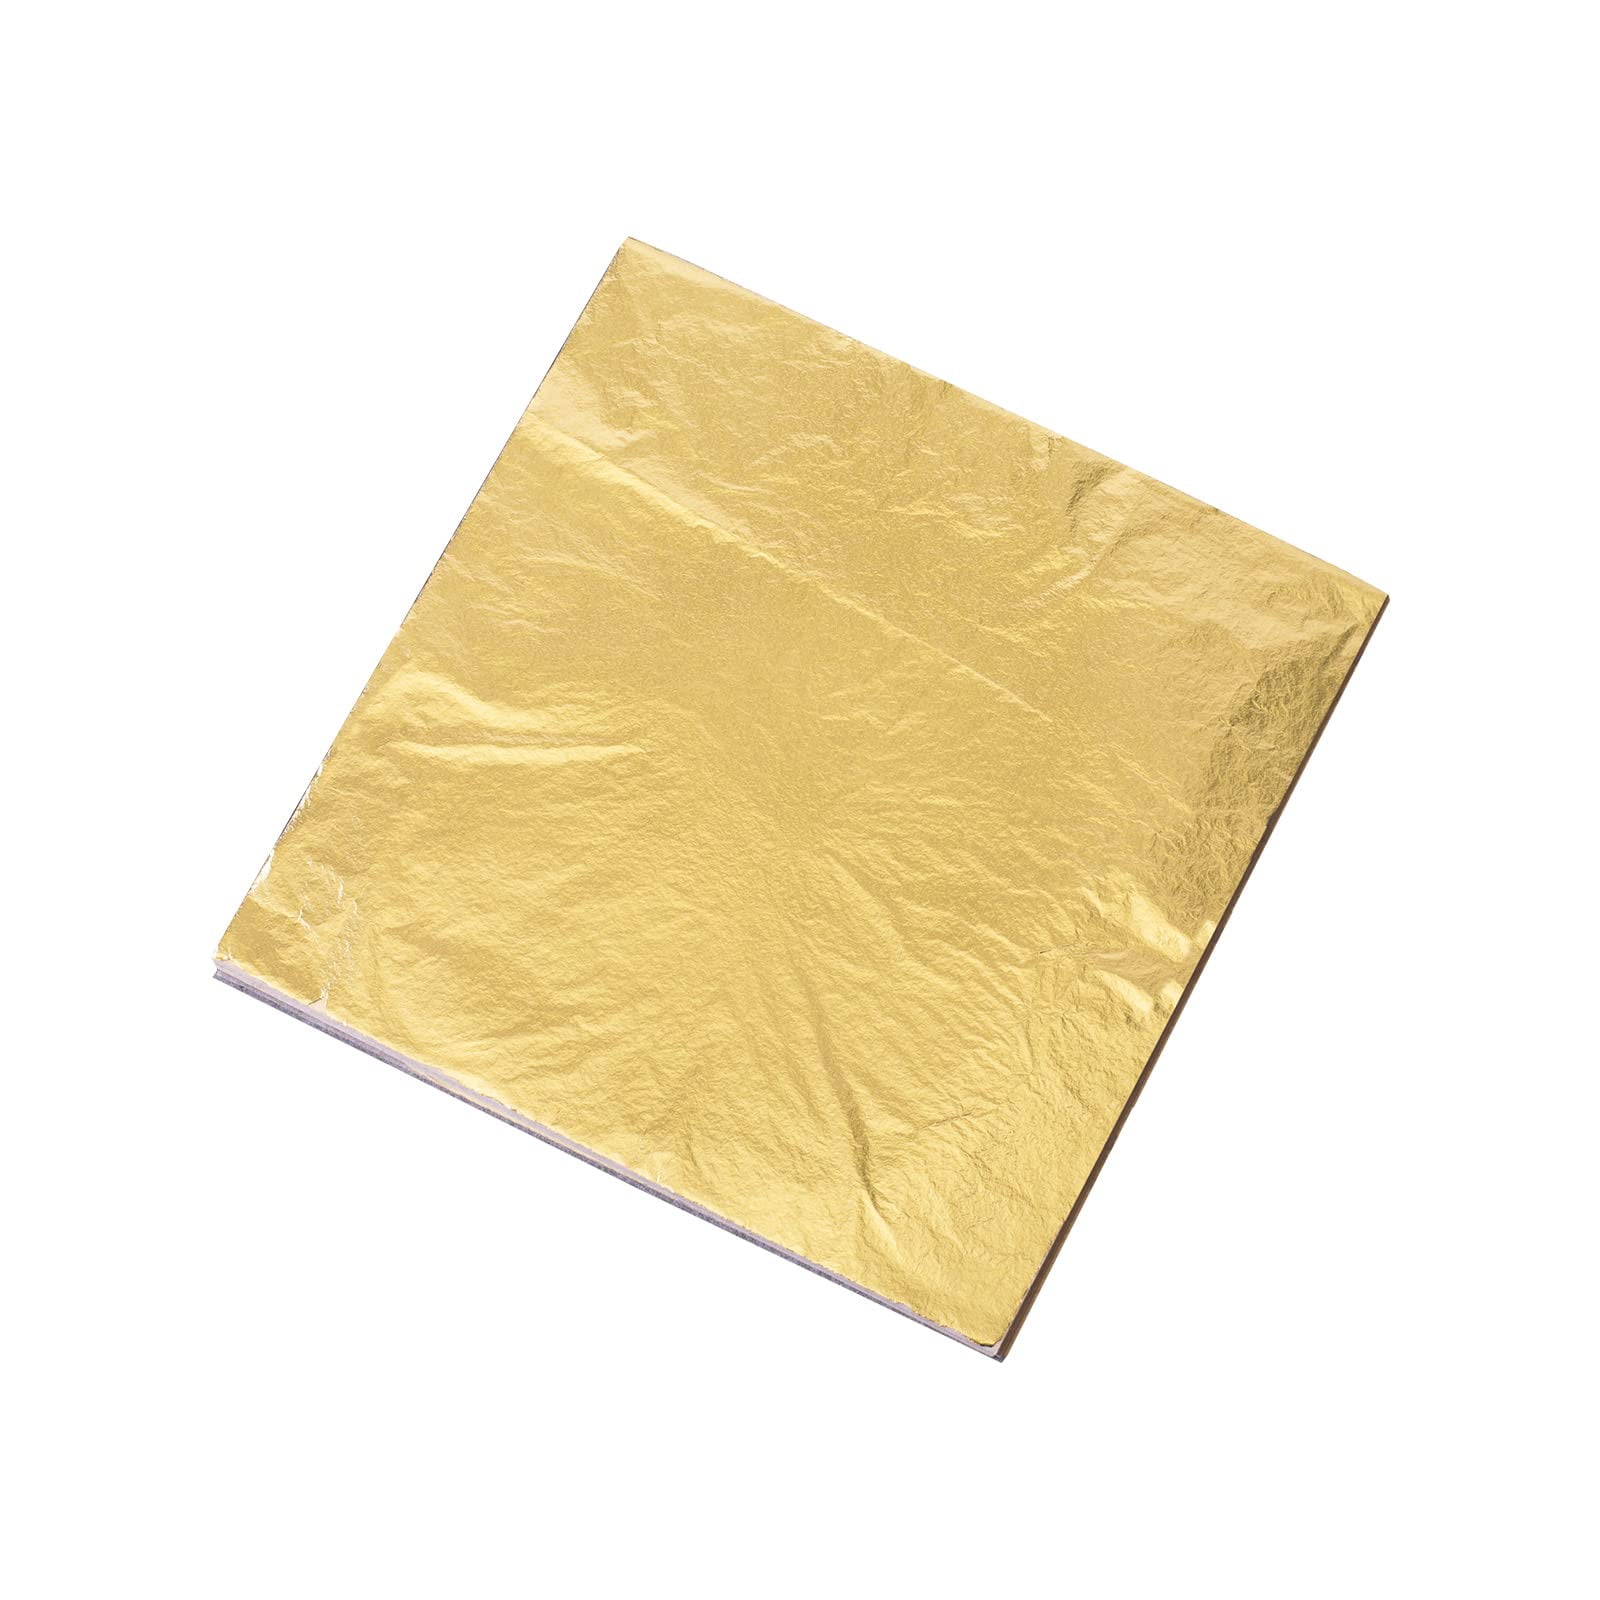 Gold Leaf Sheets, Real Copper Leaf Sheet, Schabin Gold Foil Paper 100 Sheets  6.3 by 6.3 Metallic Leaf Sheet for Painting Arts, Gilding, Crafts Nails  and DIYS Decor 6.3 rose gold 100pcs